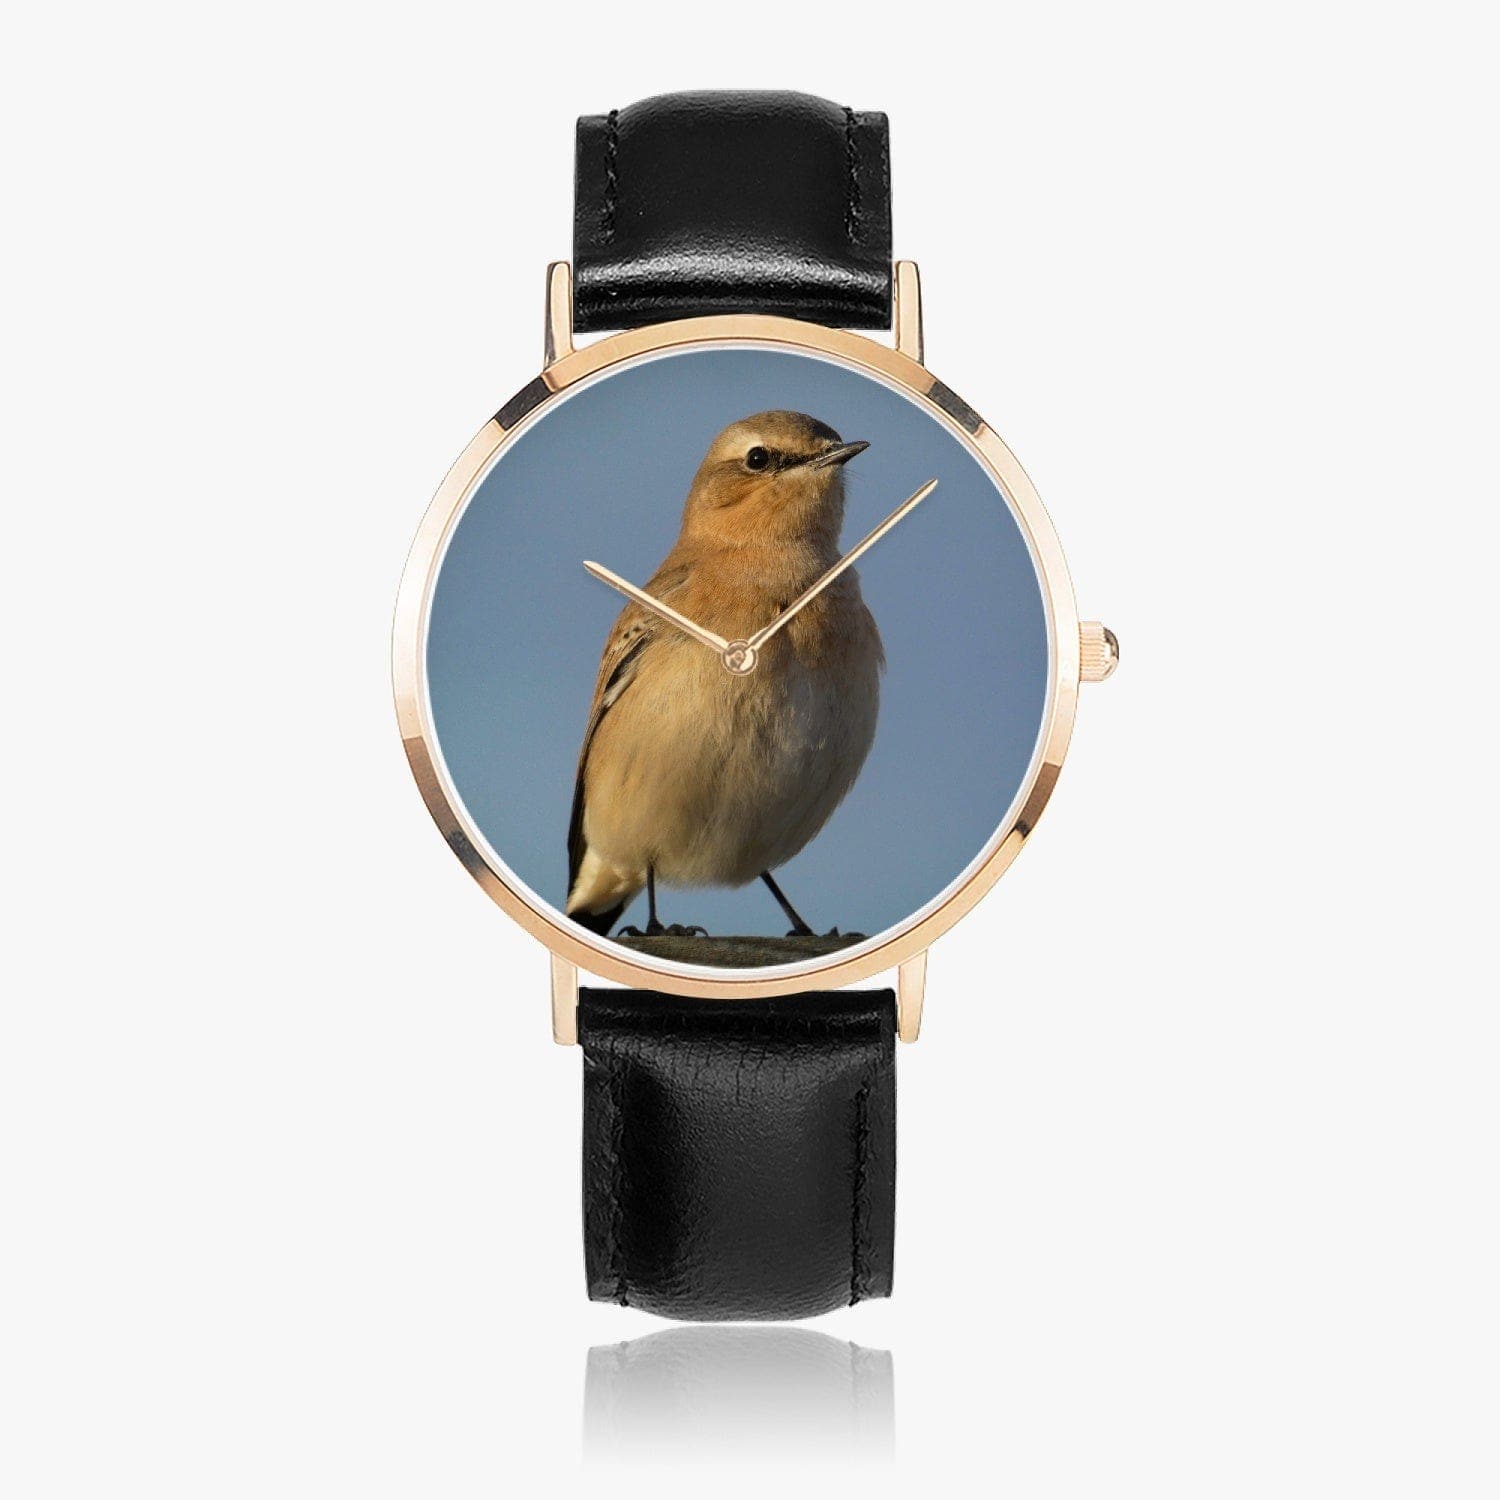 Golden bird. Hot Selling Ultra-Thin Leather Strap Quartz Watch (Rose Gold), designed by Sensus Studio Design